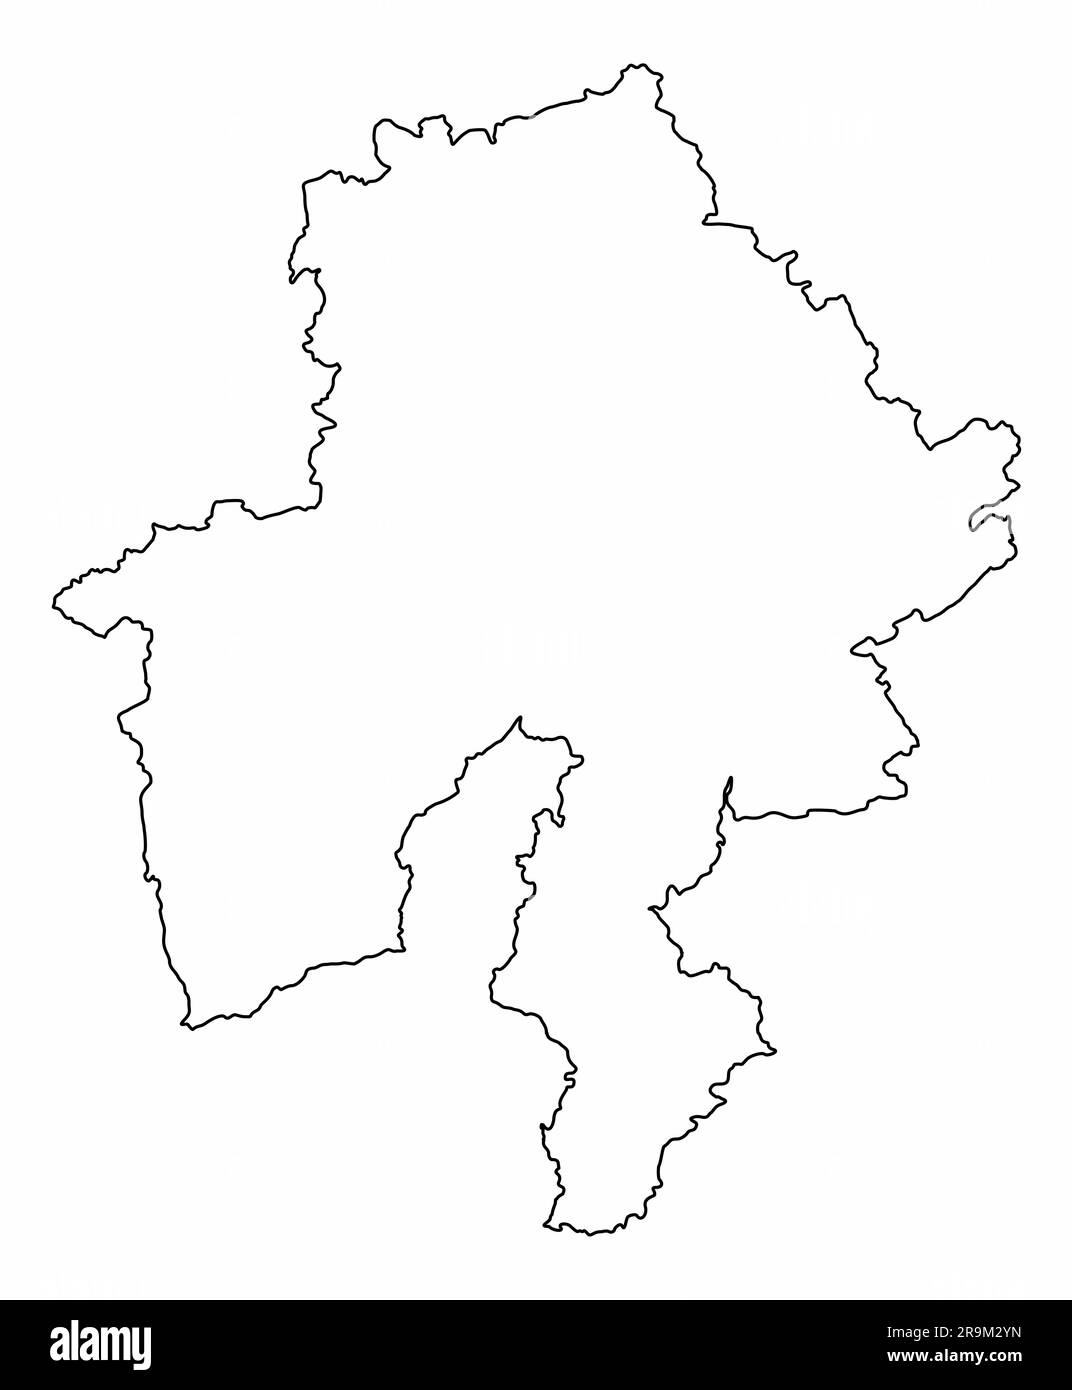 Namur map outline isolated on white background, Belgium Stock Vector